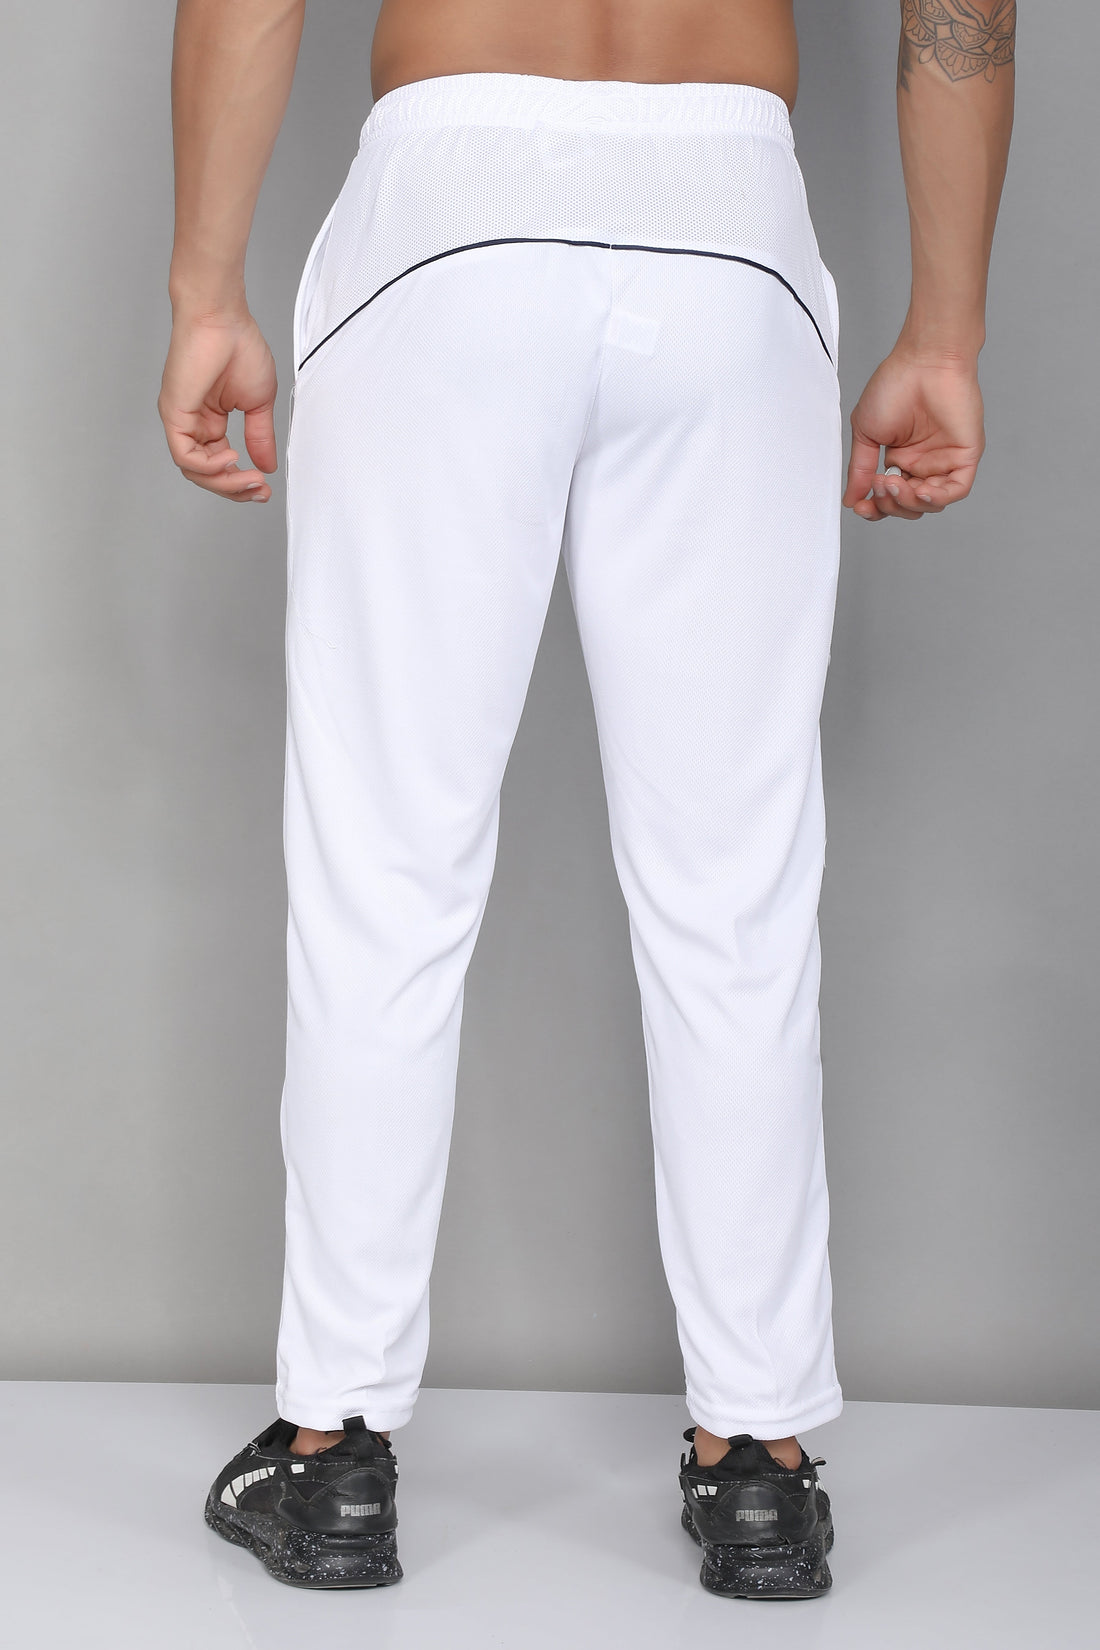 My Sports Jersey - White Cricket Pants, Cricket whites